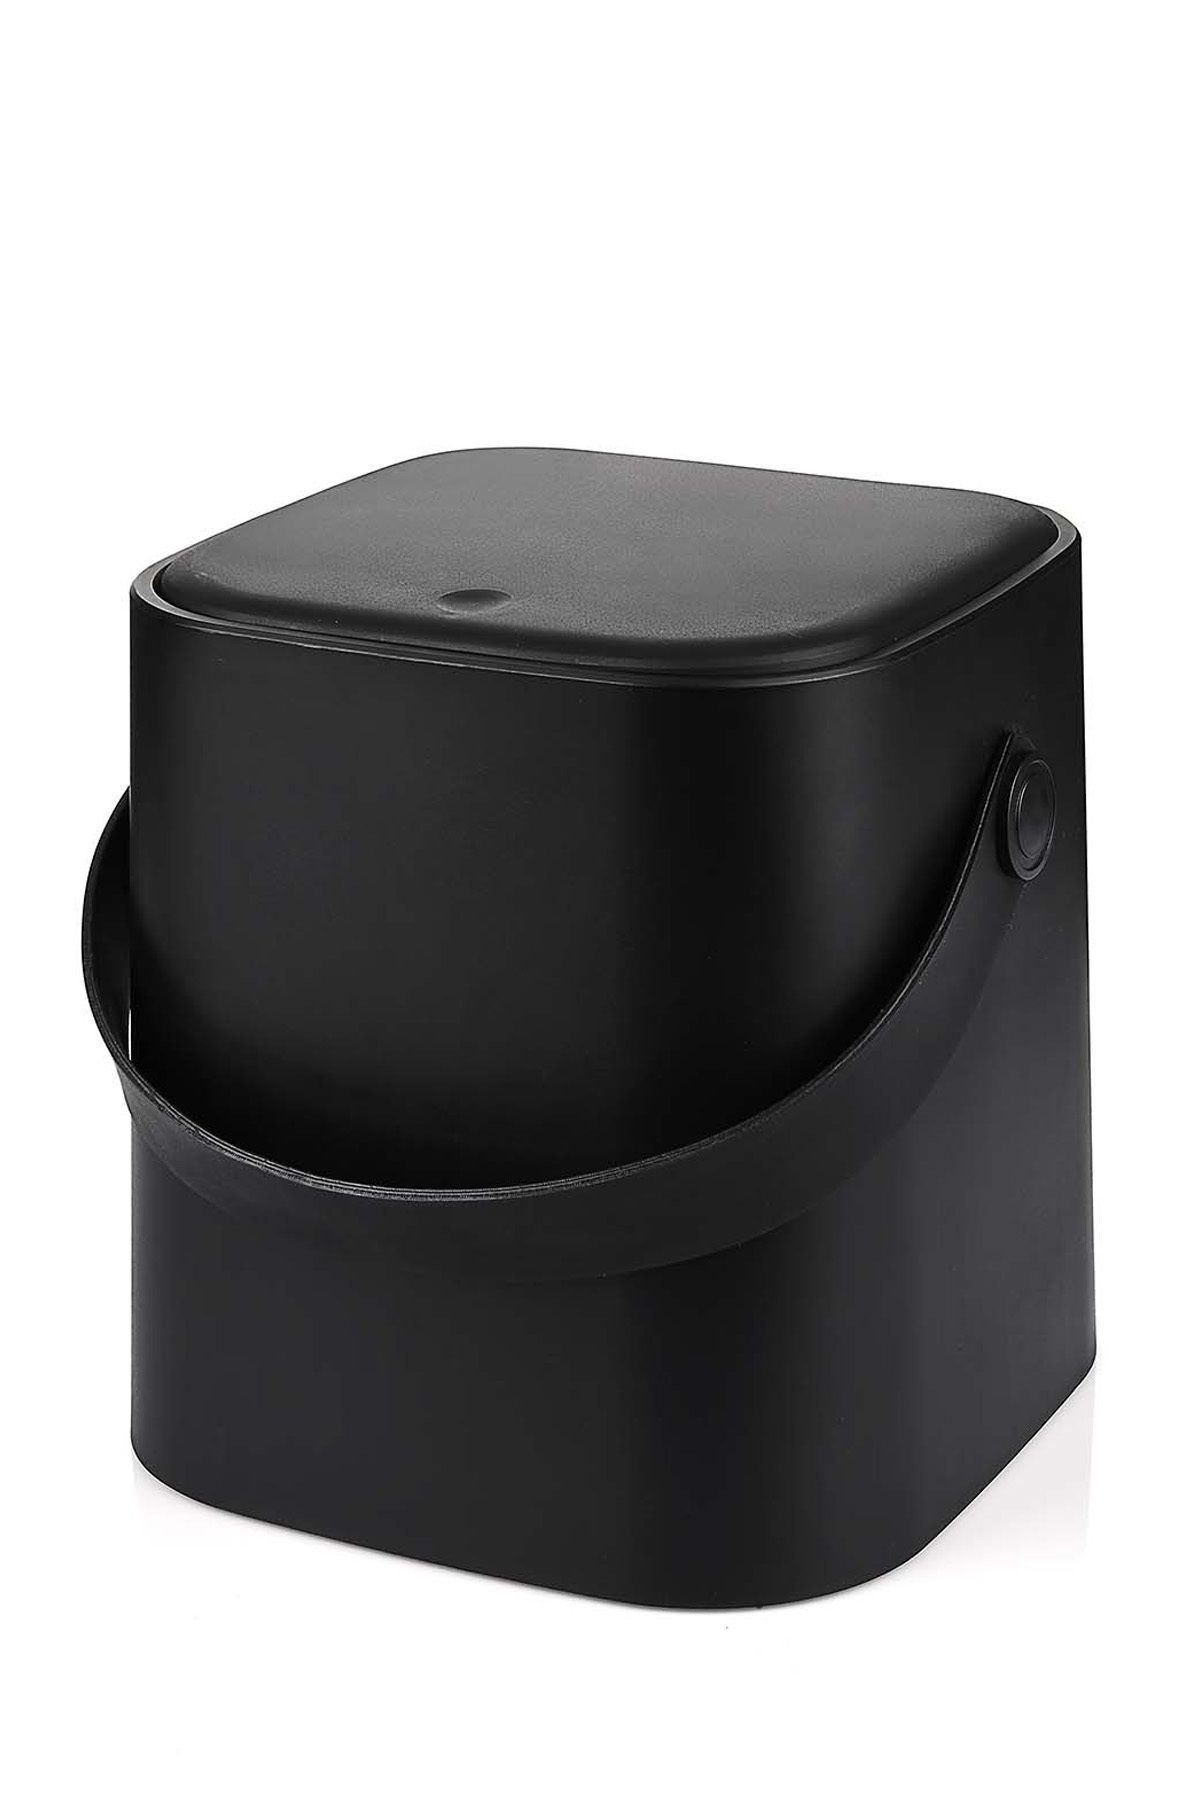 Tuffex Tutma Saplı Iç Kovalı Tezgah Üst Mutfak Çöp Kovası 4 Lt - Siyah